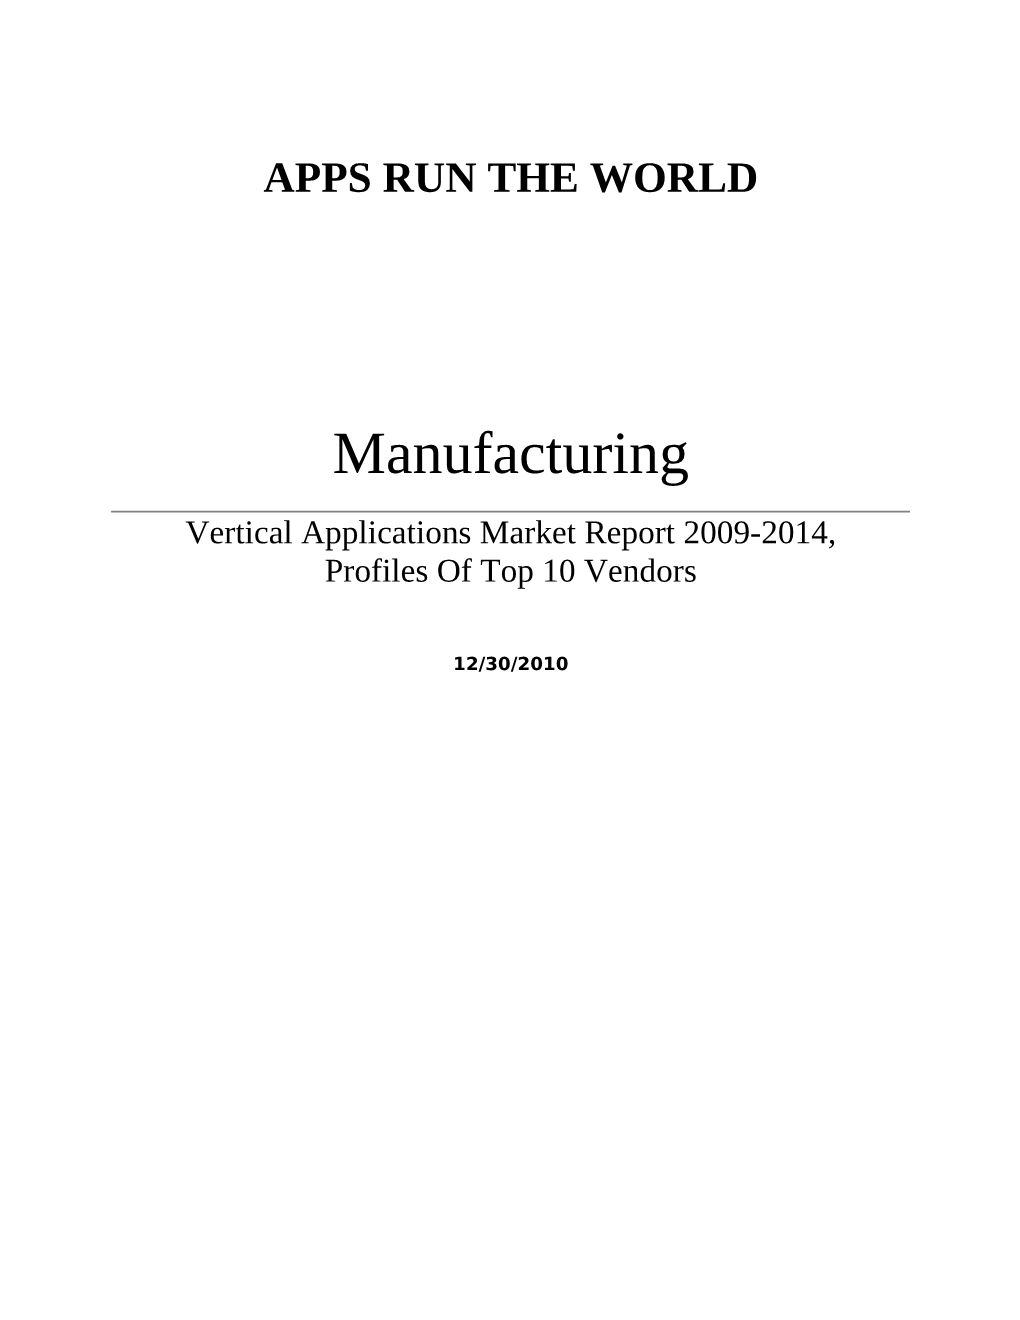 Manufacturing Vertical Applications Market Report 2009-2014, Profiles of Top 10 Vendors